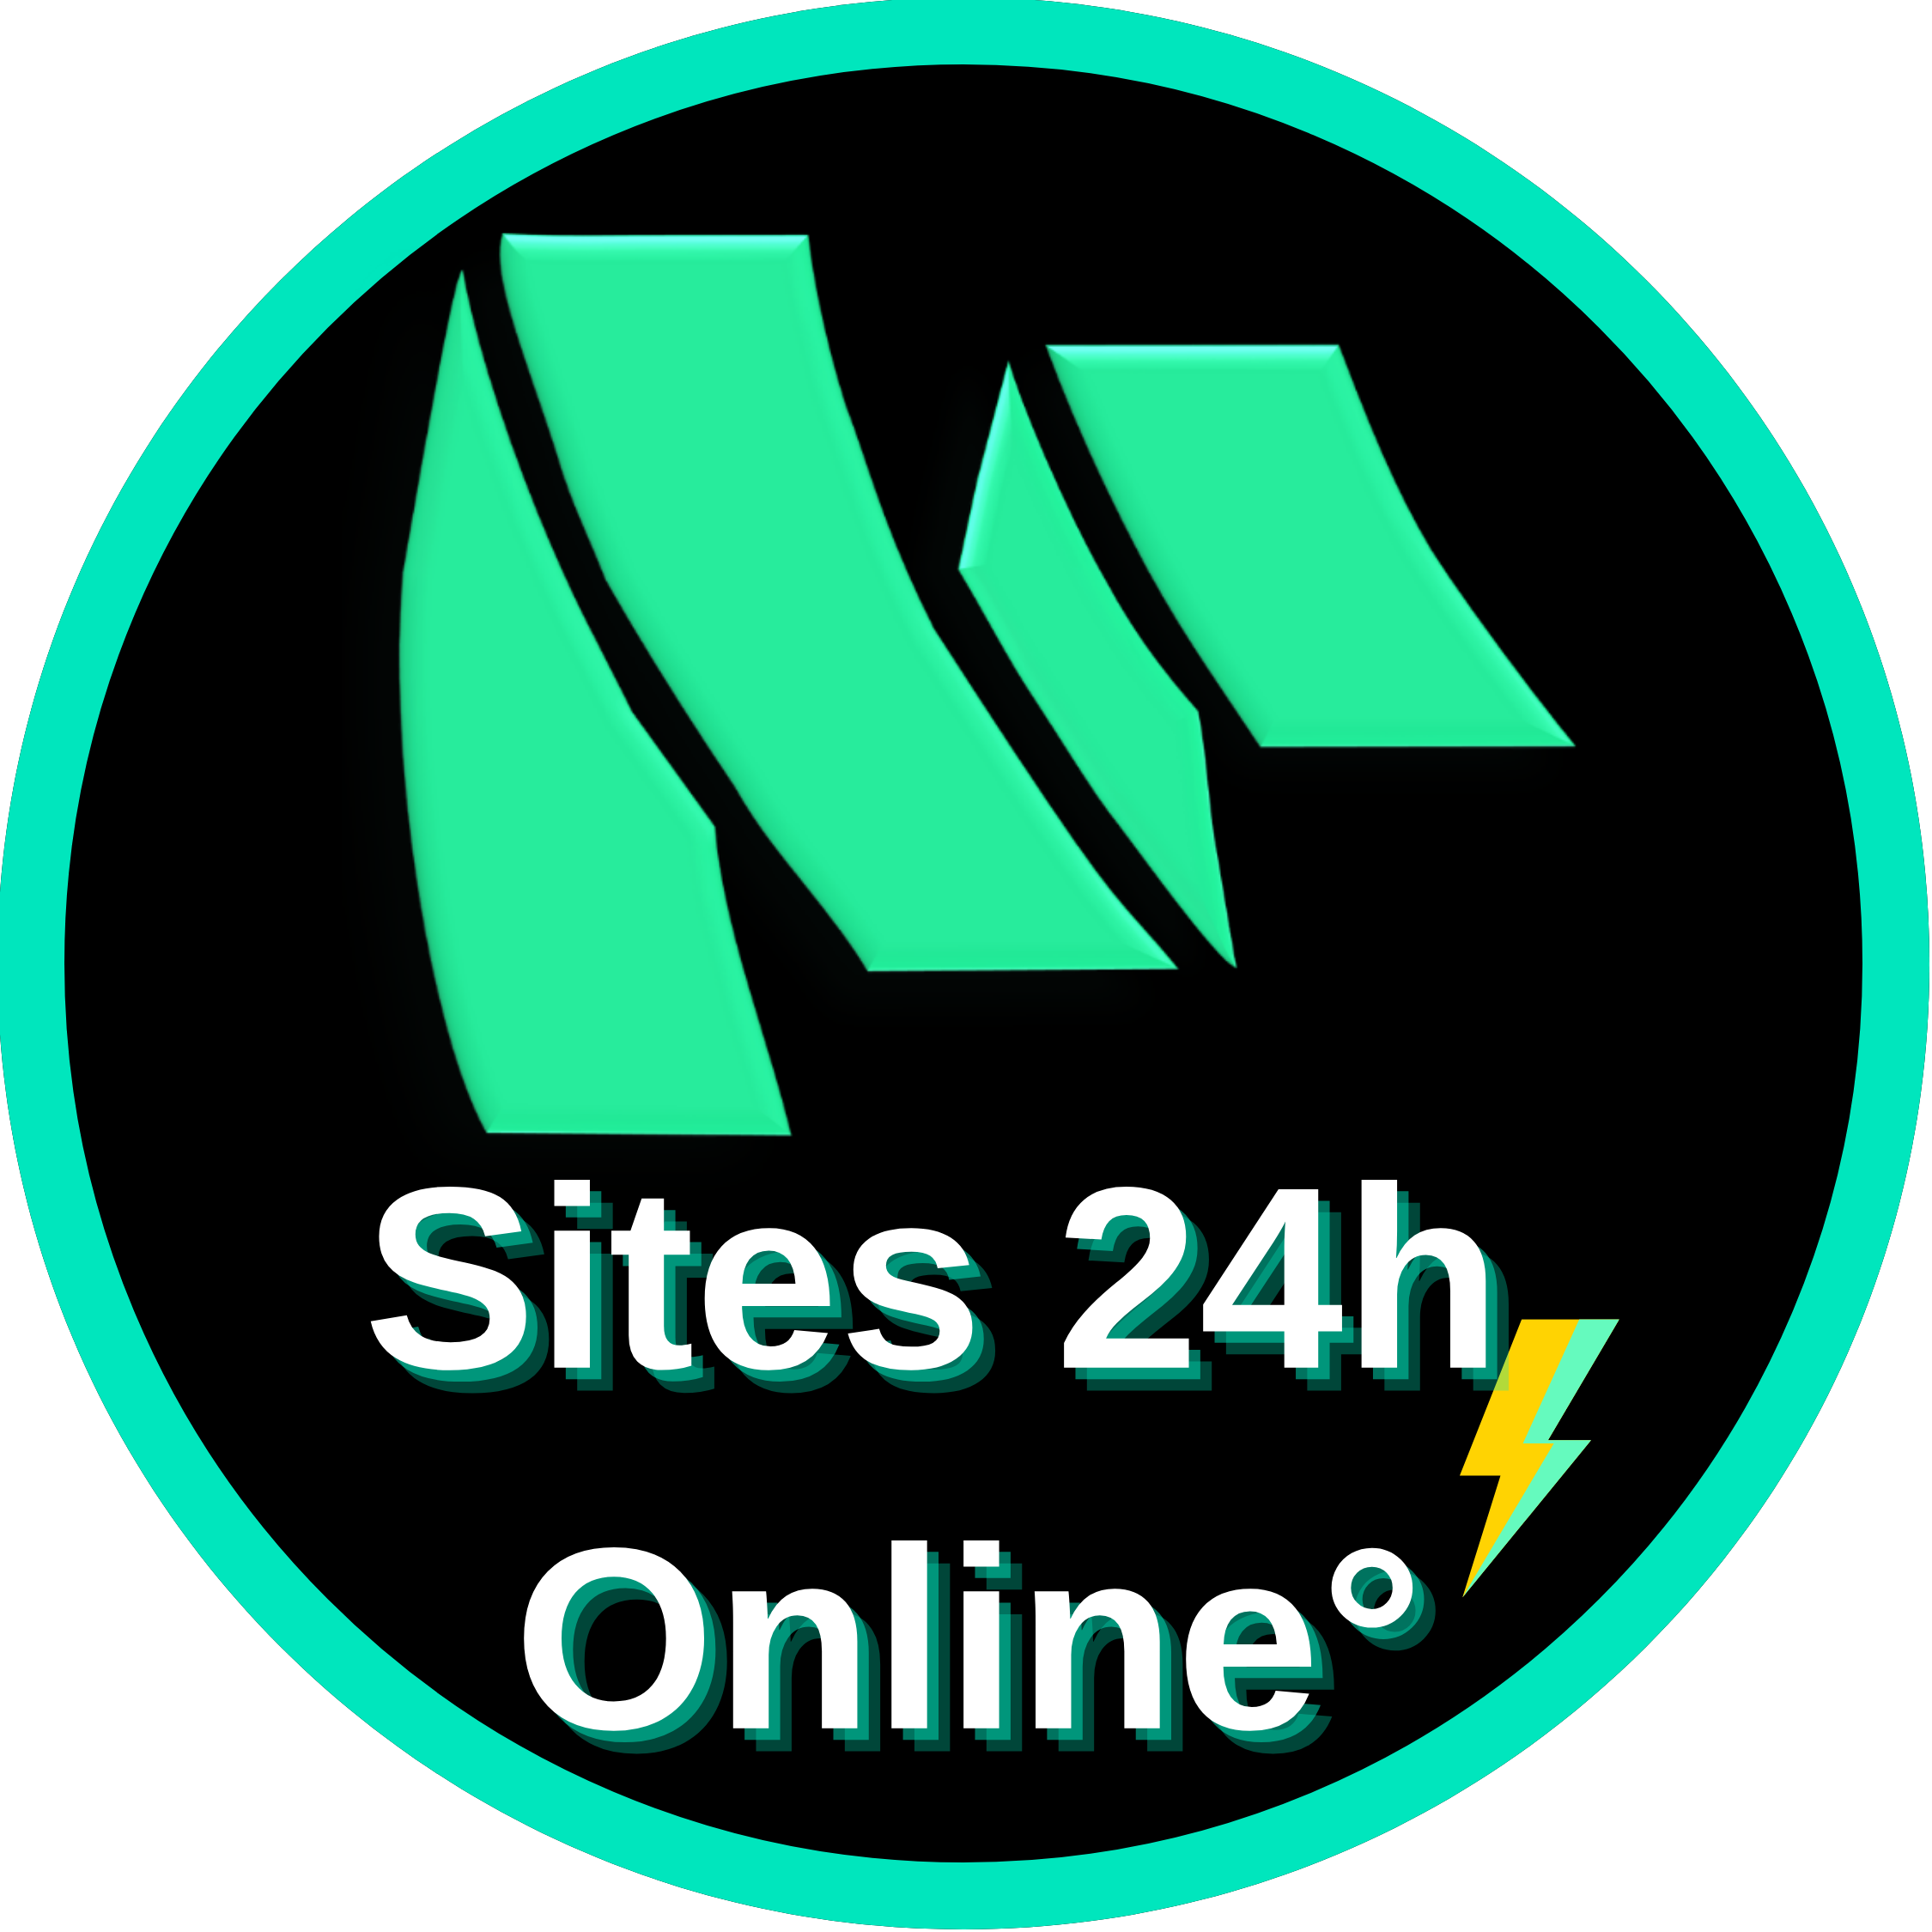 Site 24h Online